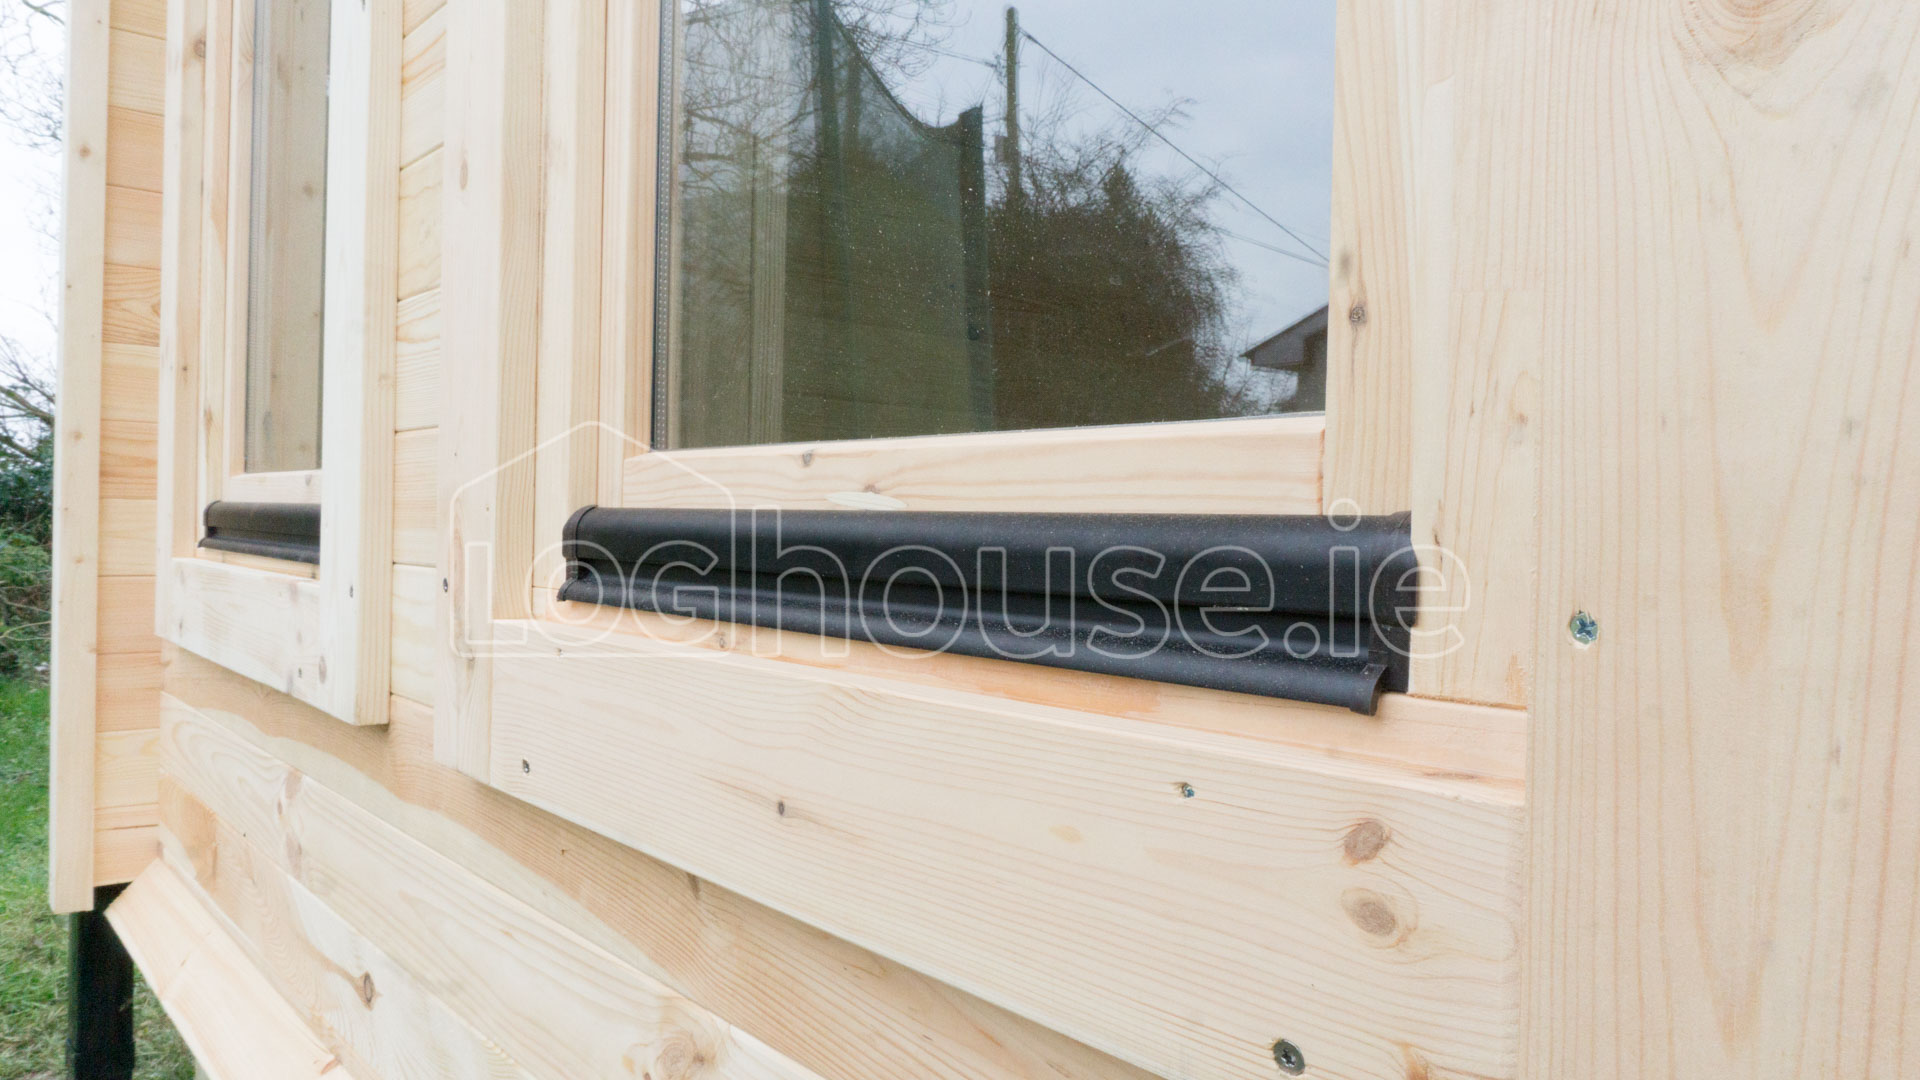 Loghouse Living Type Windows & Doors